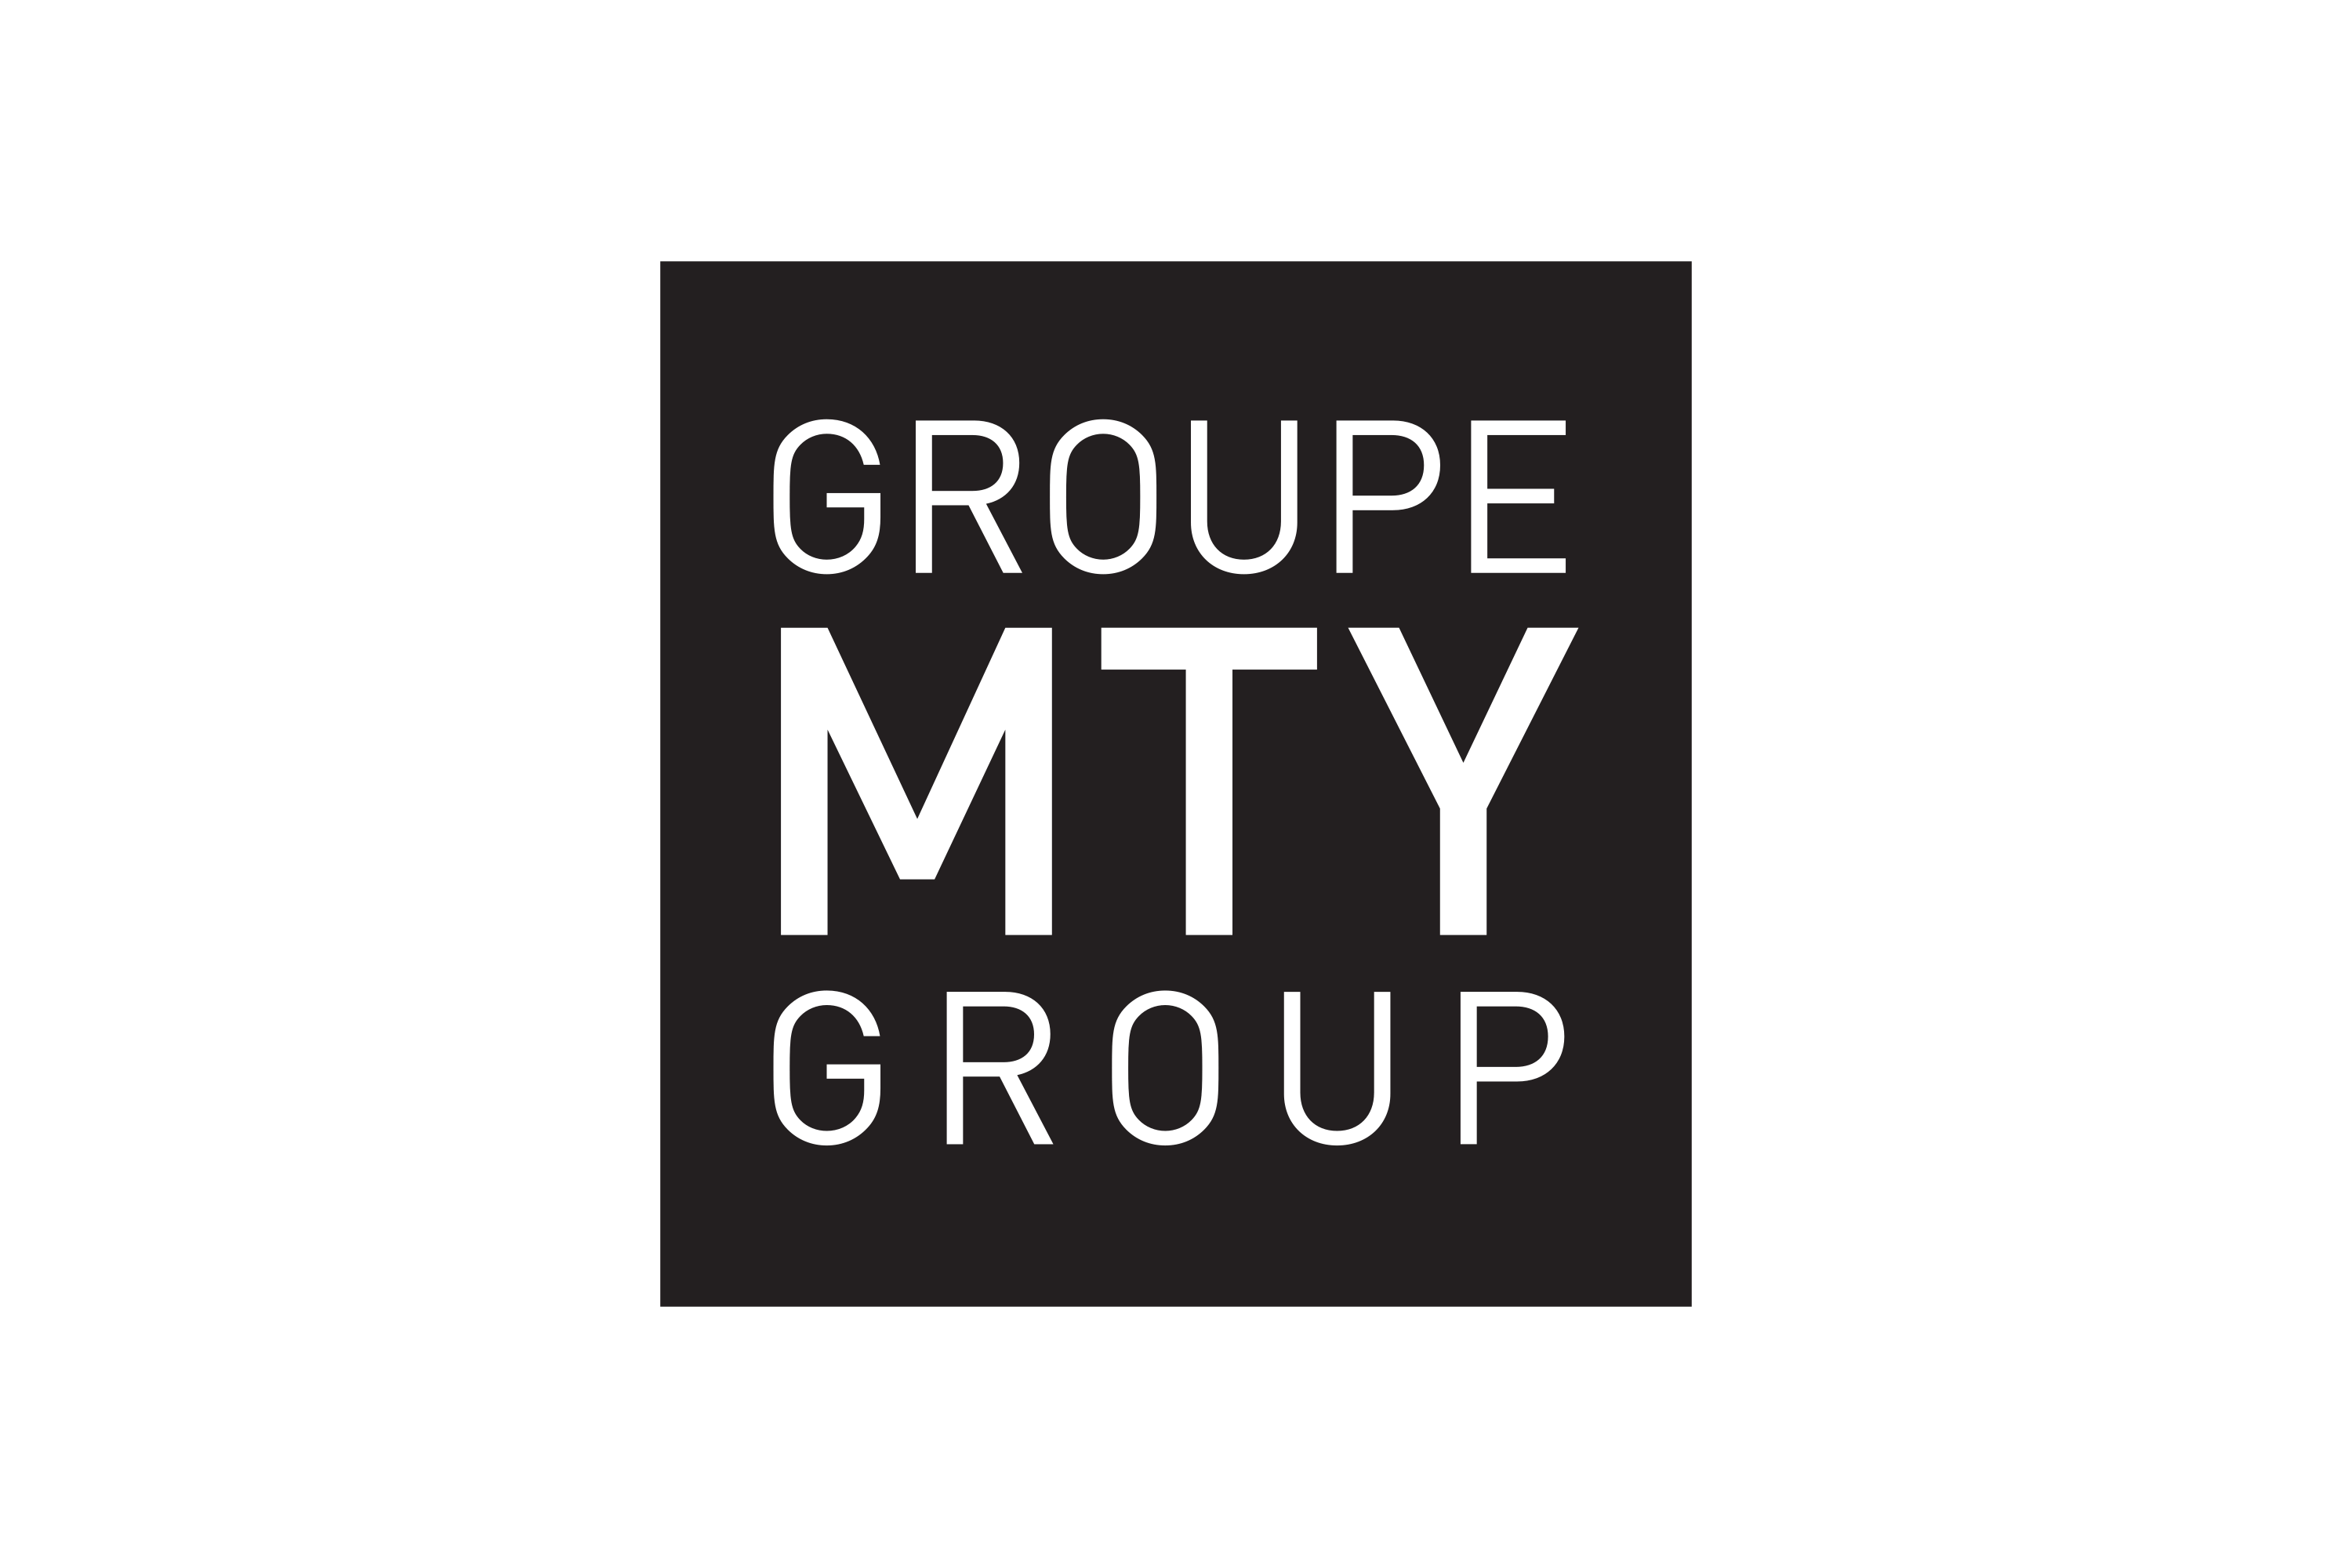 MTY Food Group Logo